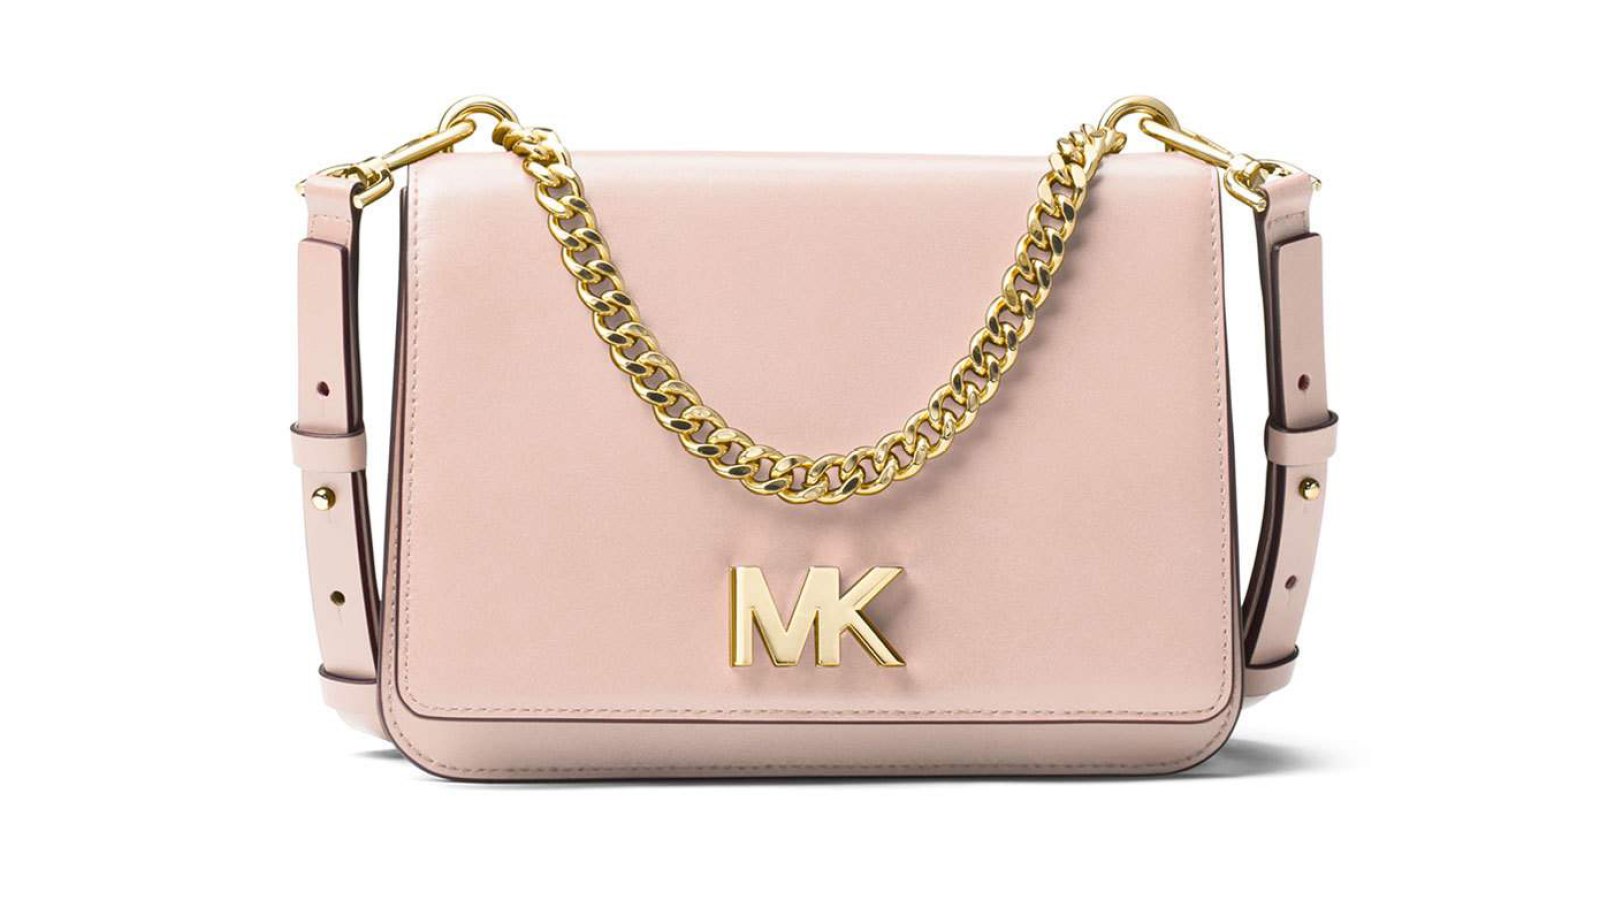 Pink Michael Kors Handbag  Handbag essentials, Girly bags, Luxury